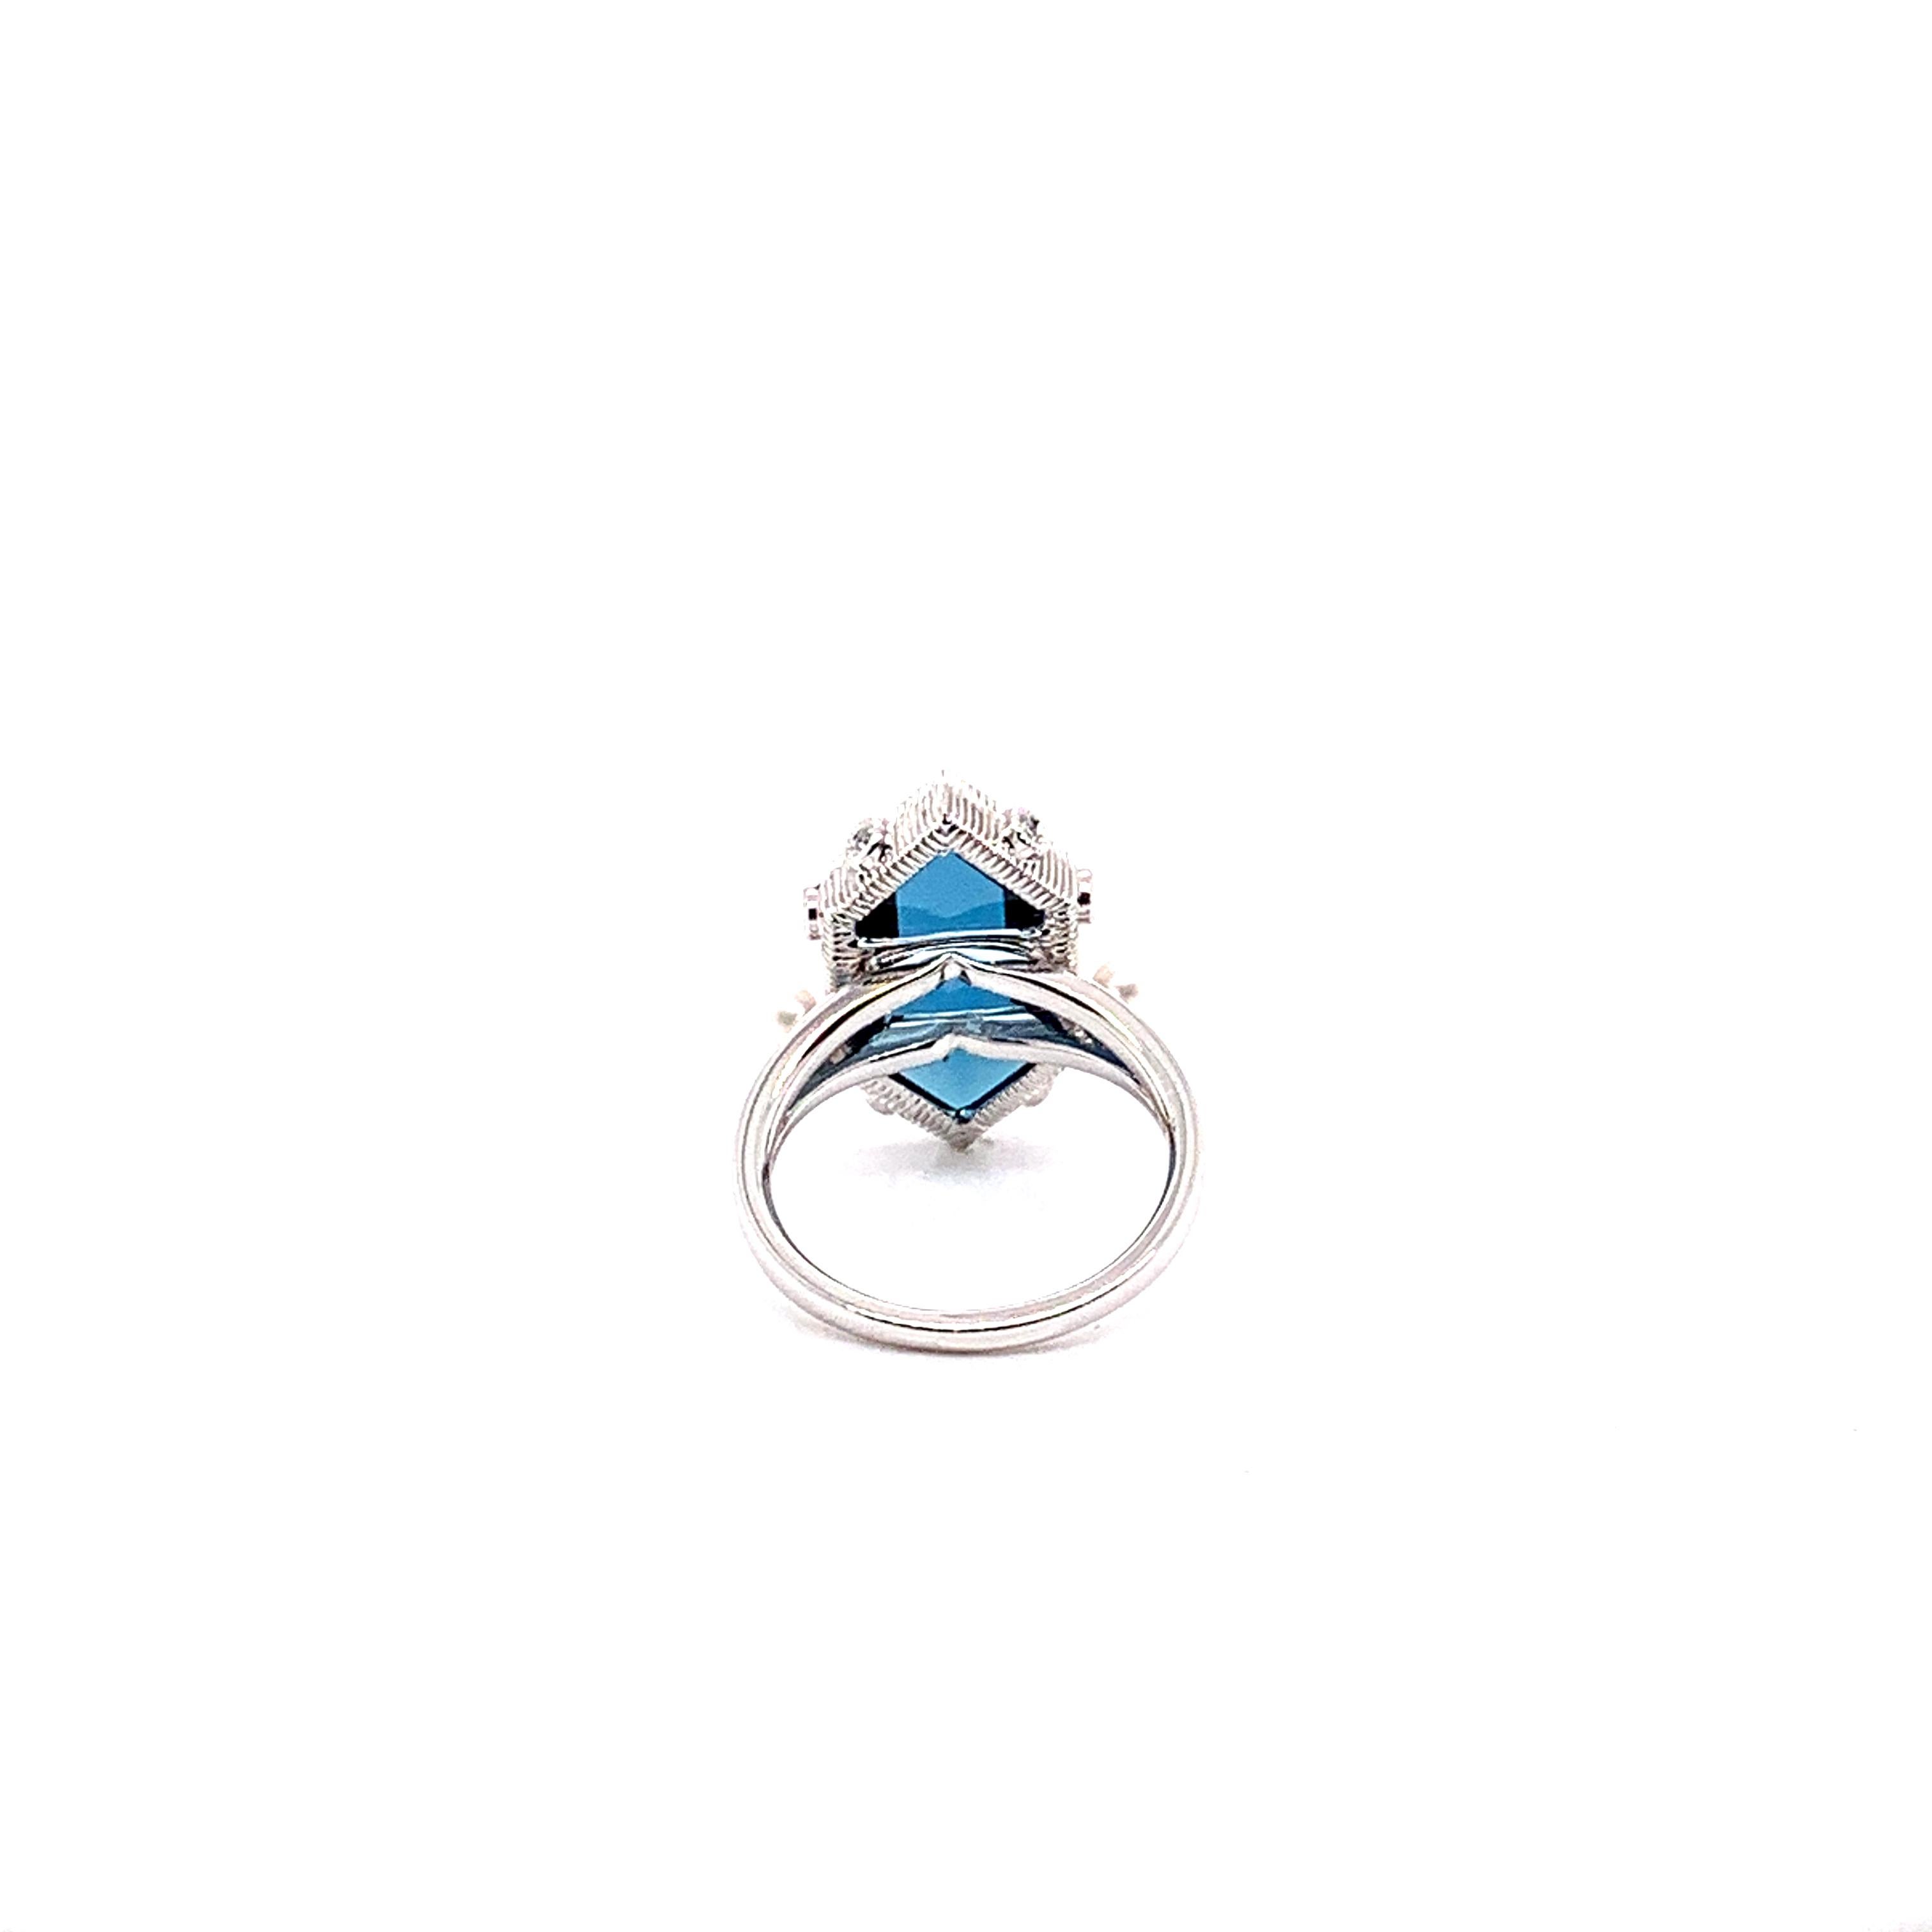 Hexagon Cut 10.46 Carat London Blue Topaz Ring in 18 Karat White Gold with Diamonds & Pearls